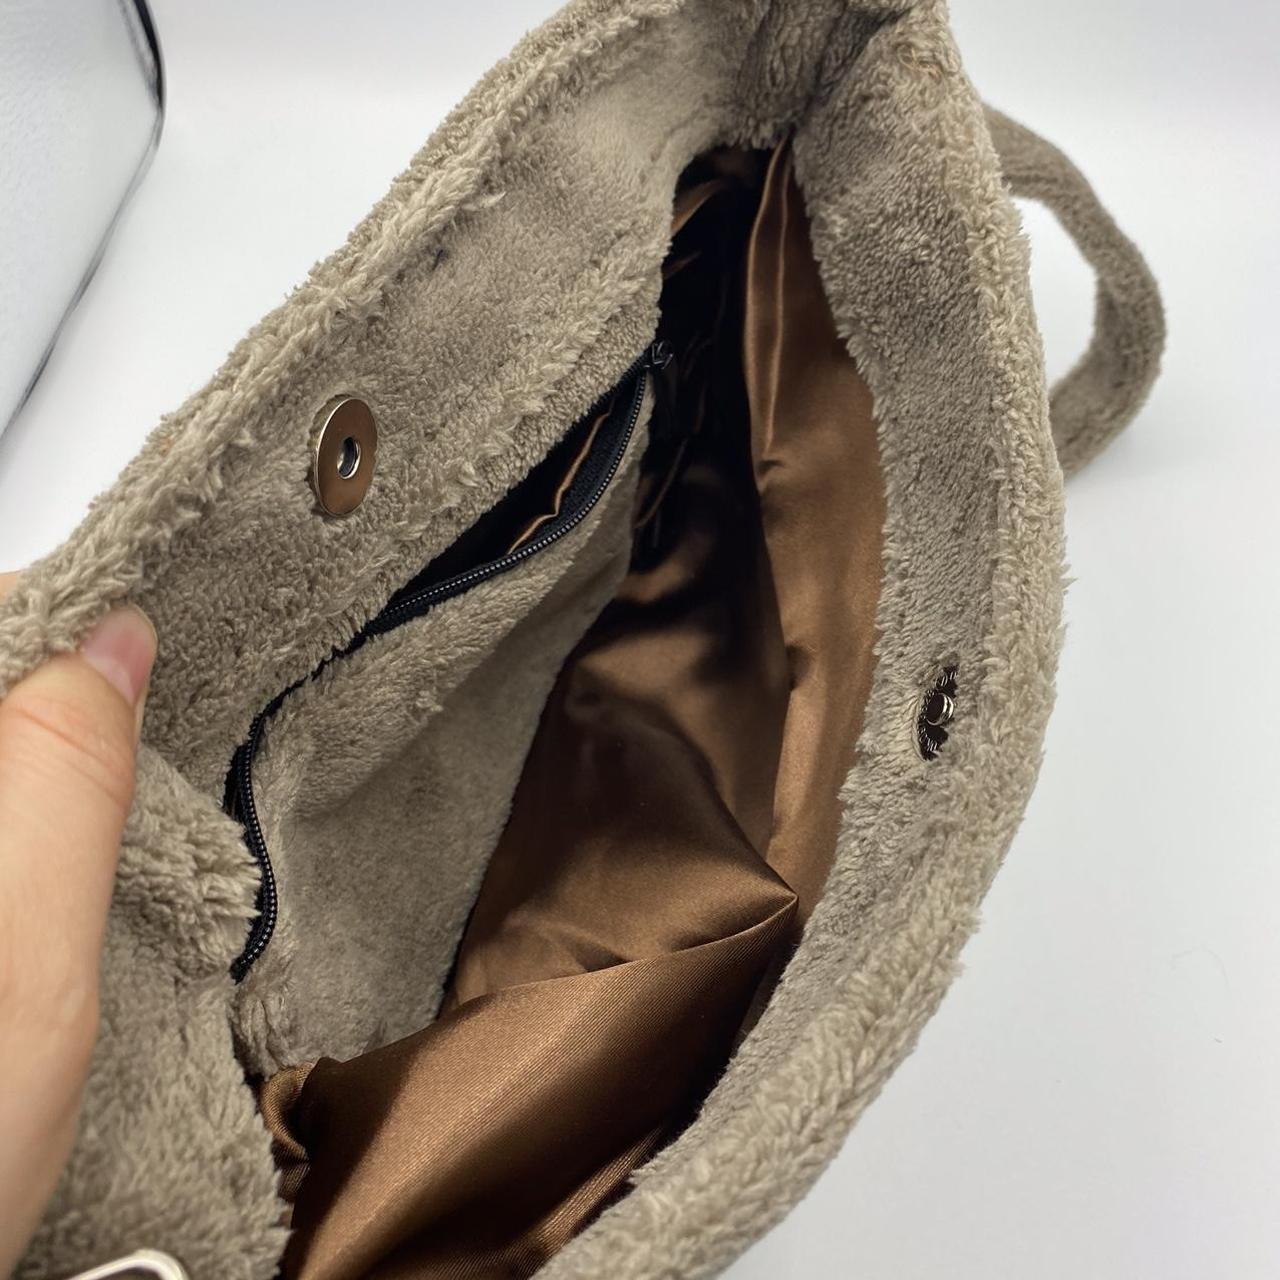 Chanel VIP Bag (Brown) Chanel Precision bag Seen on - Depop